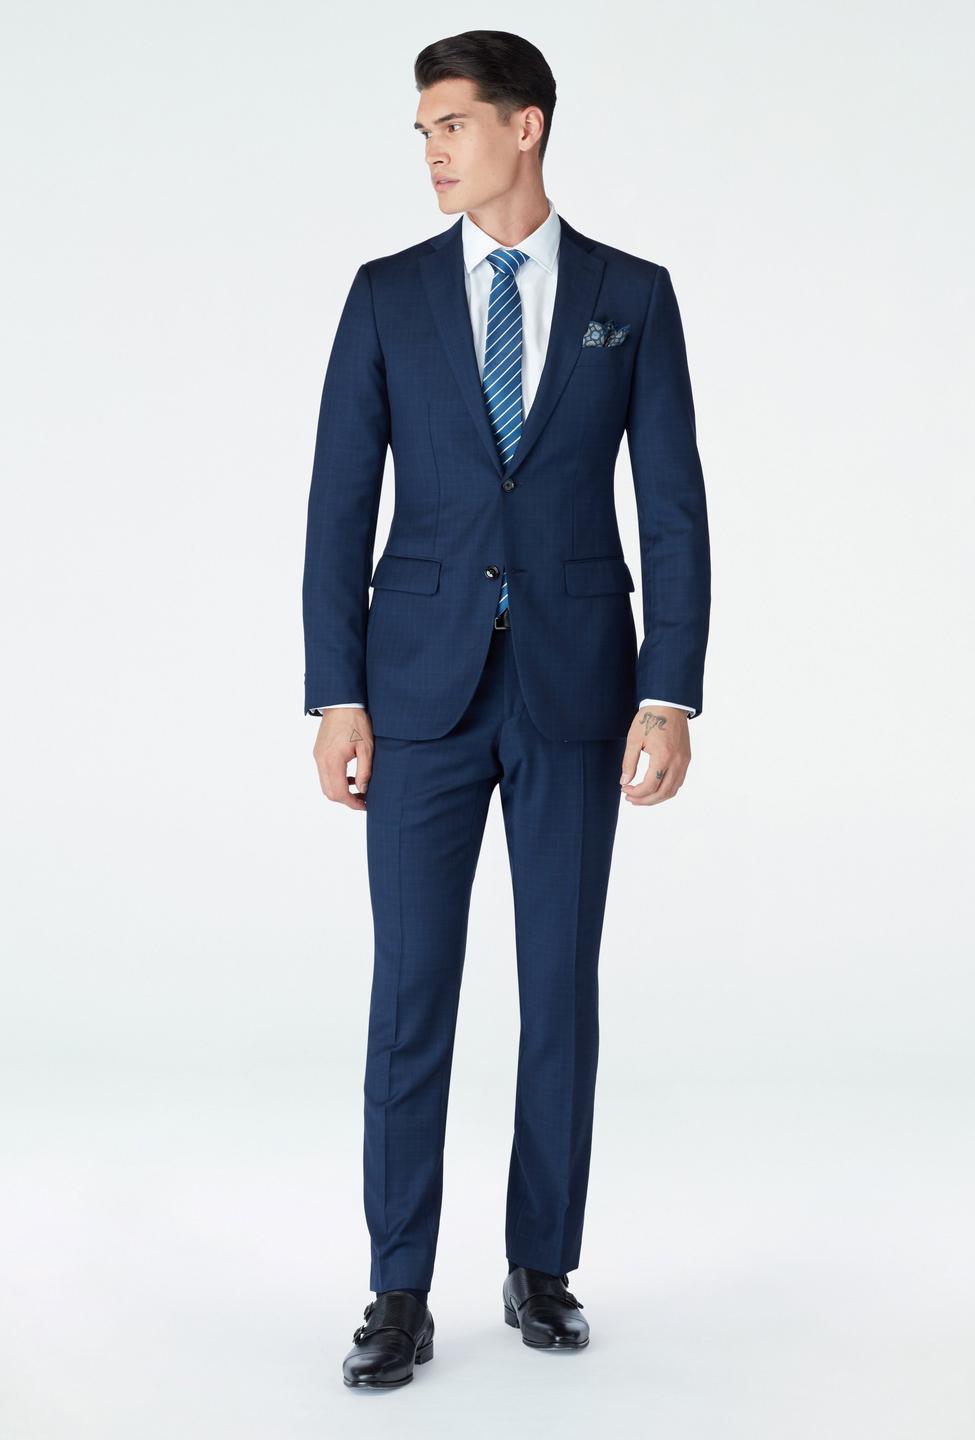 Blue blazer - Harrogate Checked Design from Luxury Indochino Collection